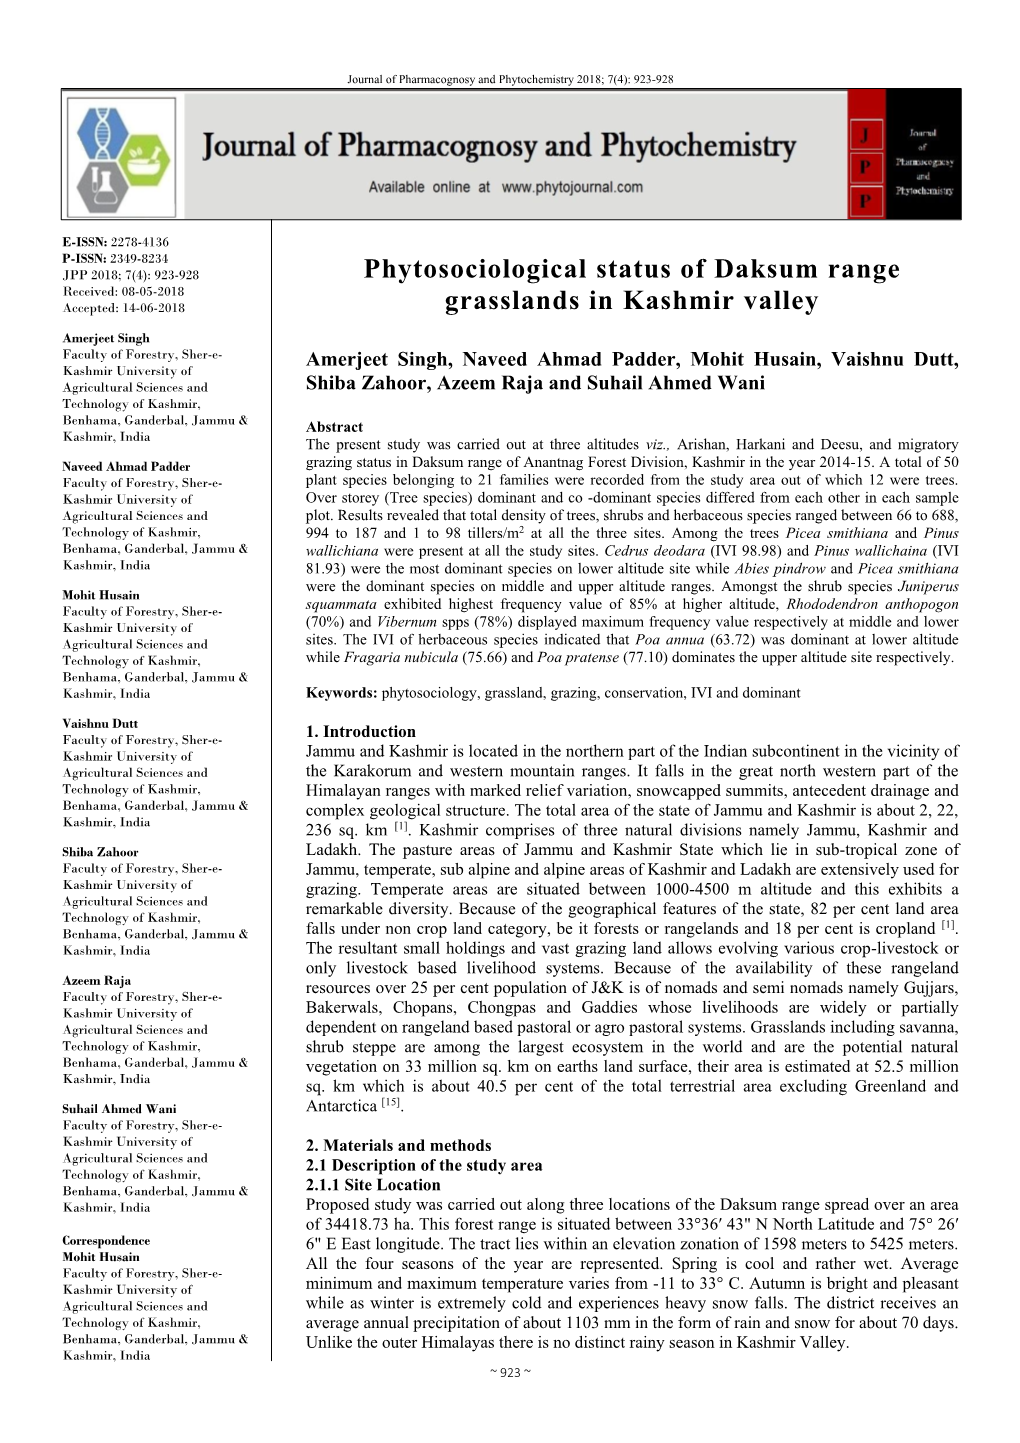 Phytosociological Status of Daksum Range Grasslands in Kashmir Valley